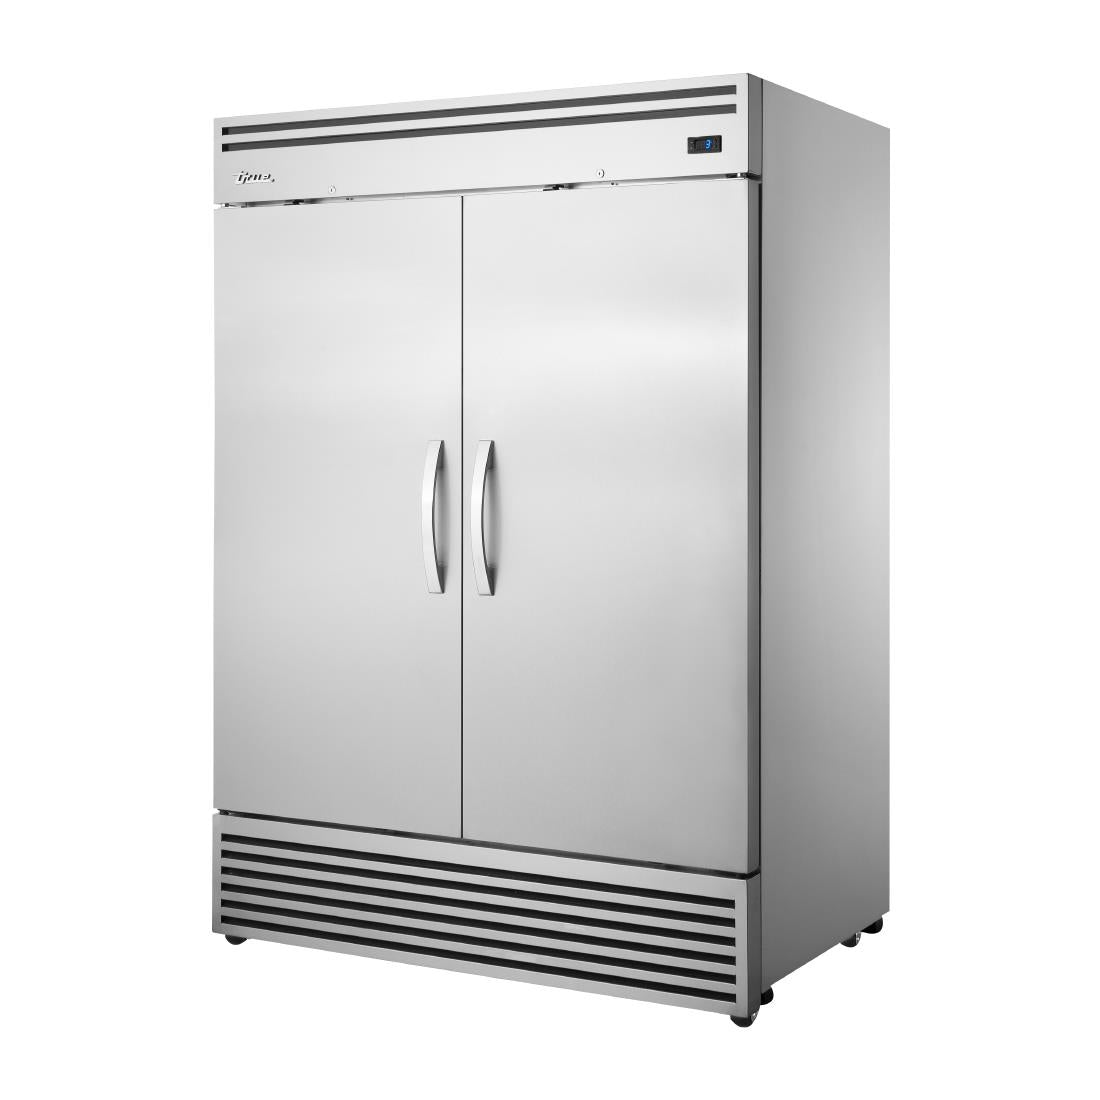 CX787 True 2/1 GN Upright Foodservice Refrigerator TGN-2R-2S JD Catering Equipment Solutions Ltd